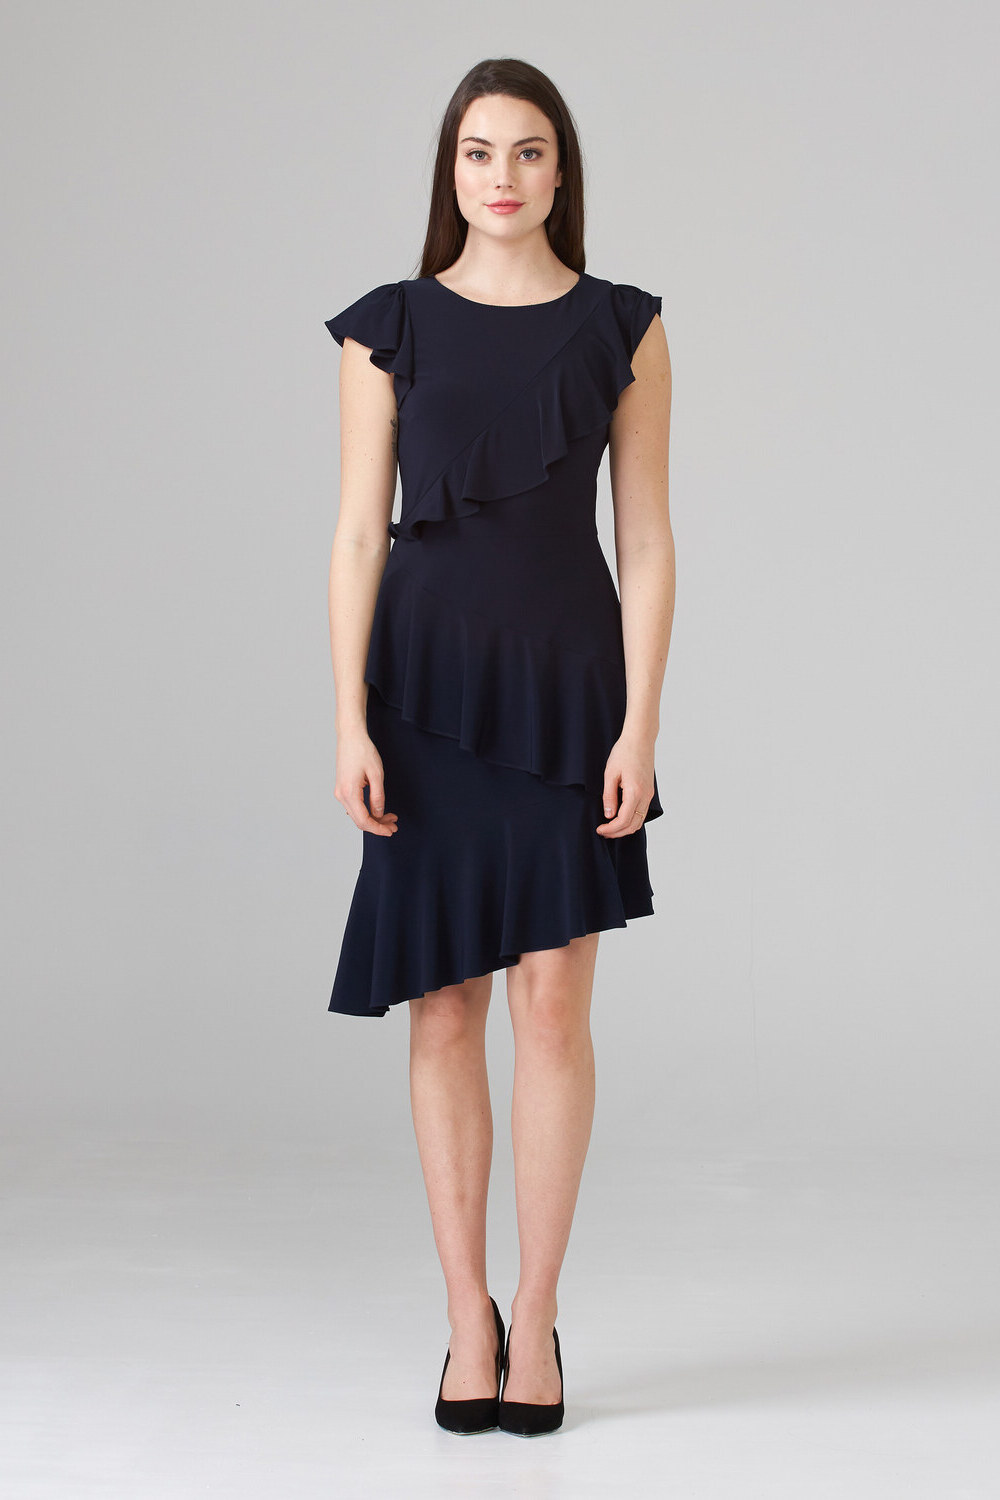 Joseph Ribkoff Dress Style 201516. Midnight Blue 40